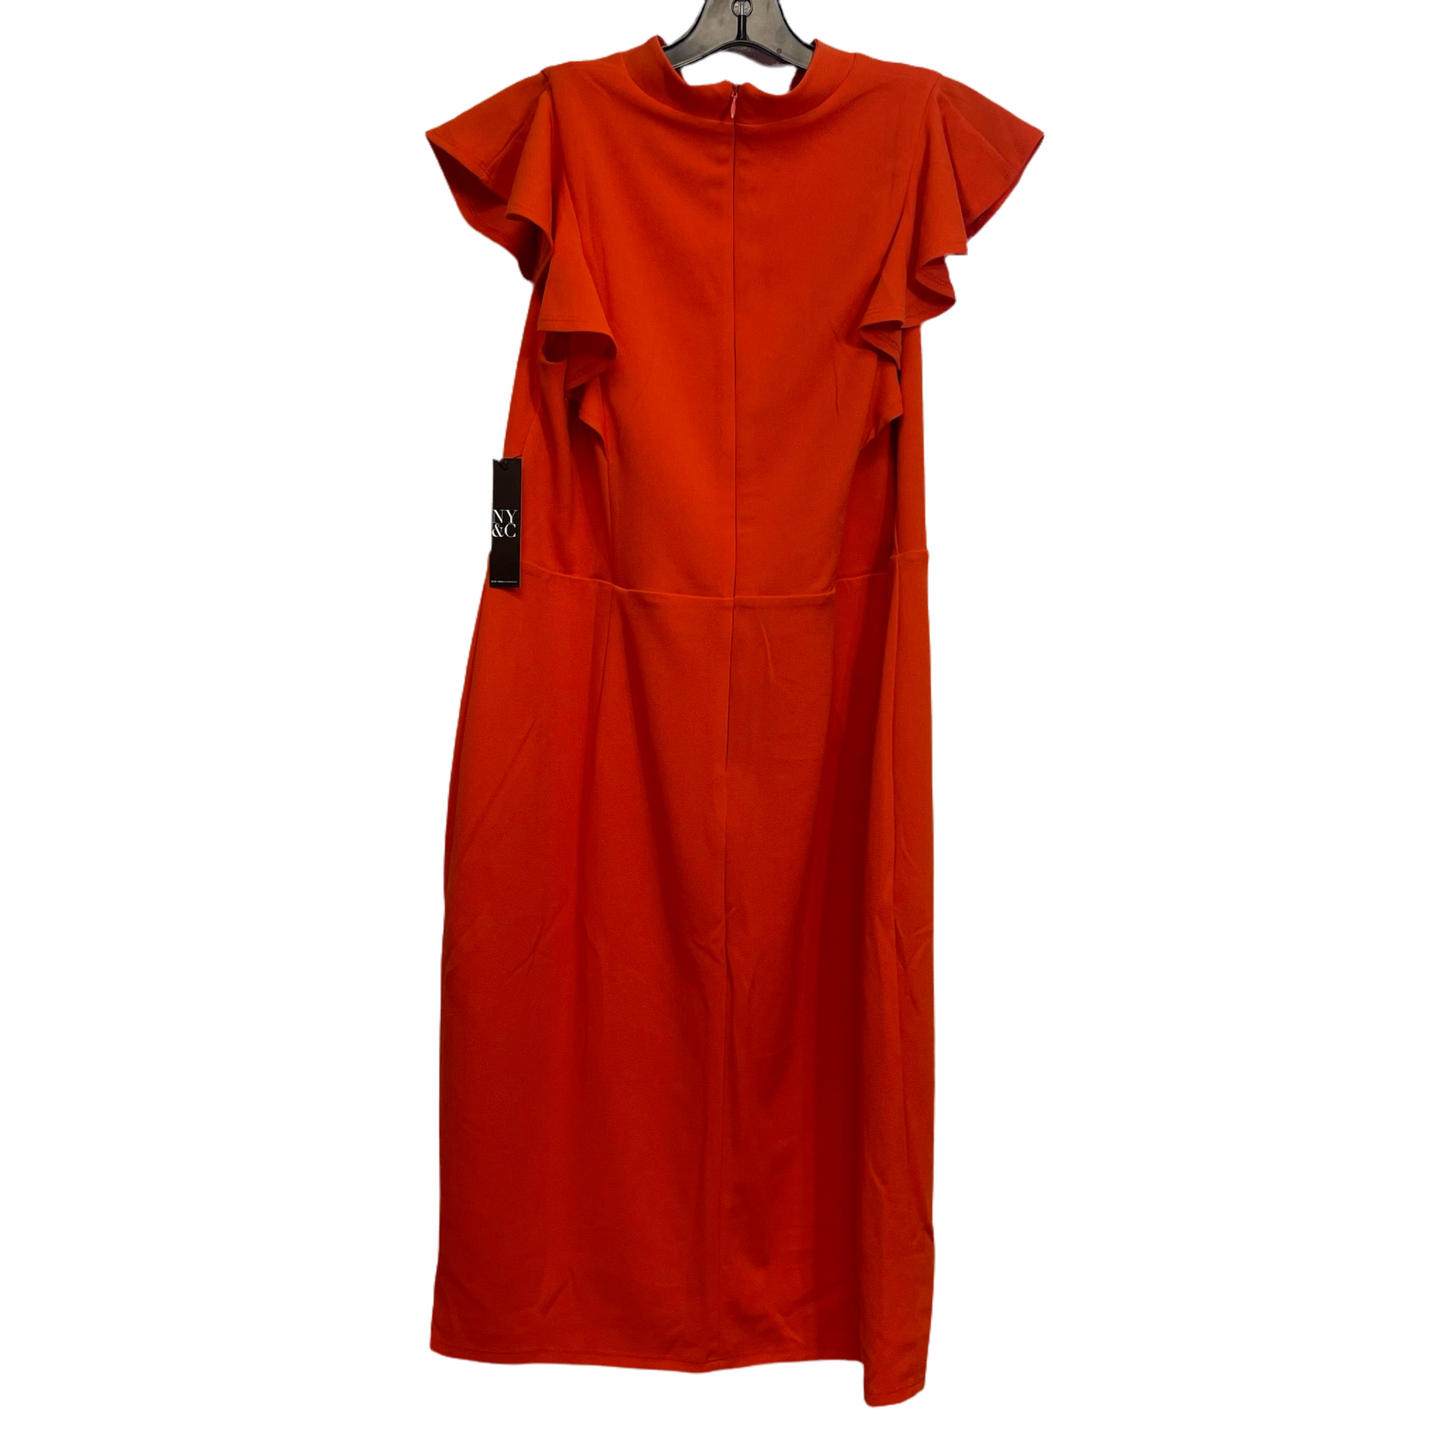 Orange Dress Casual Midi New York And Co O, Size Xl